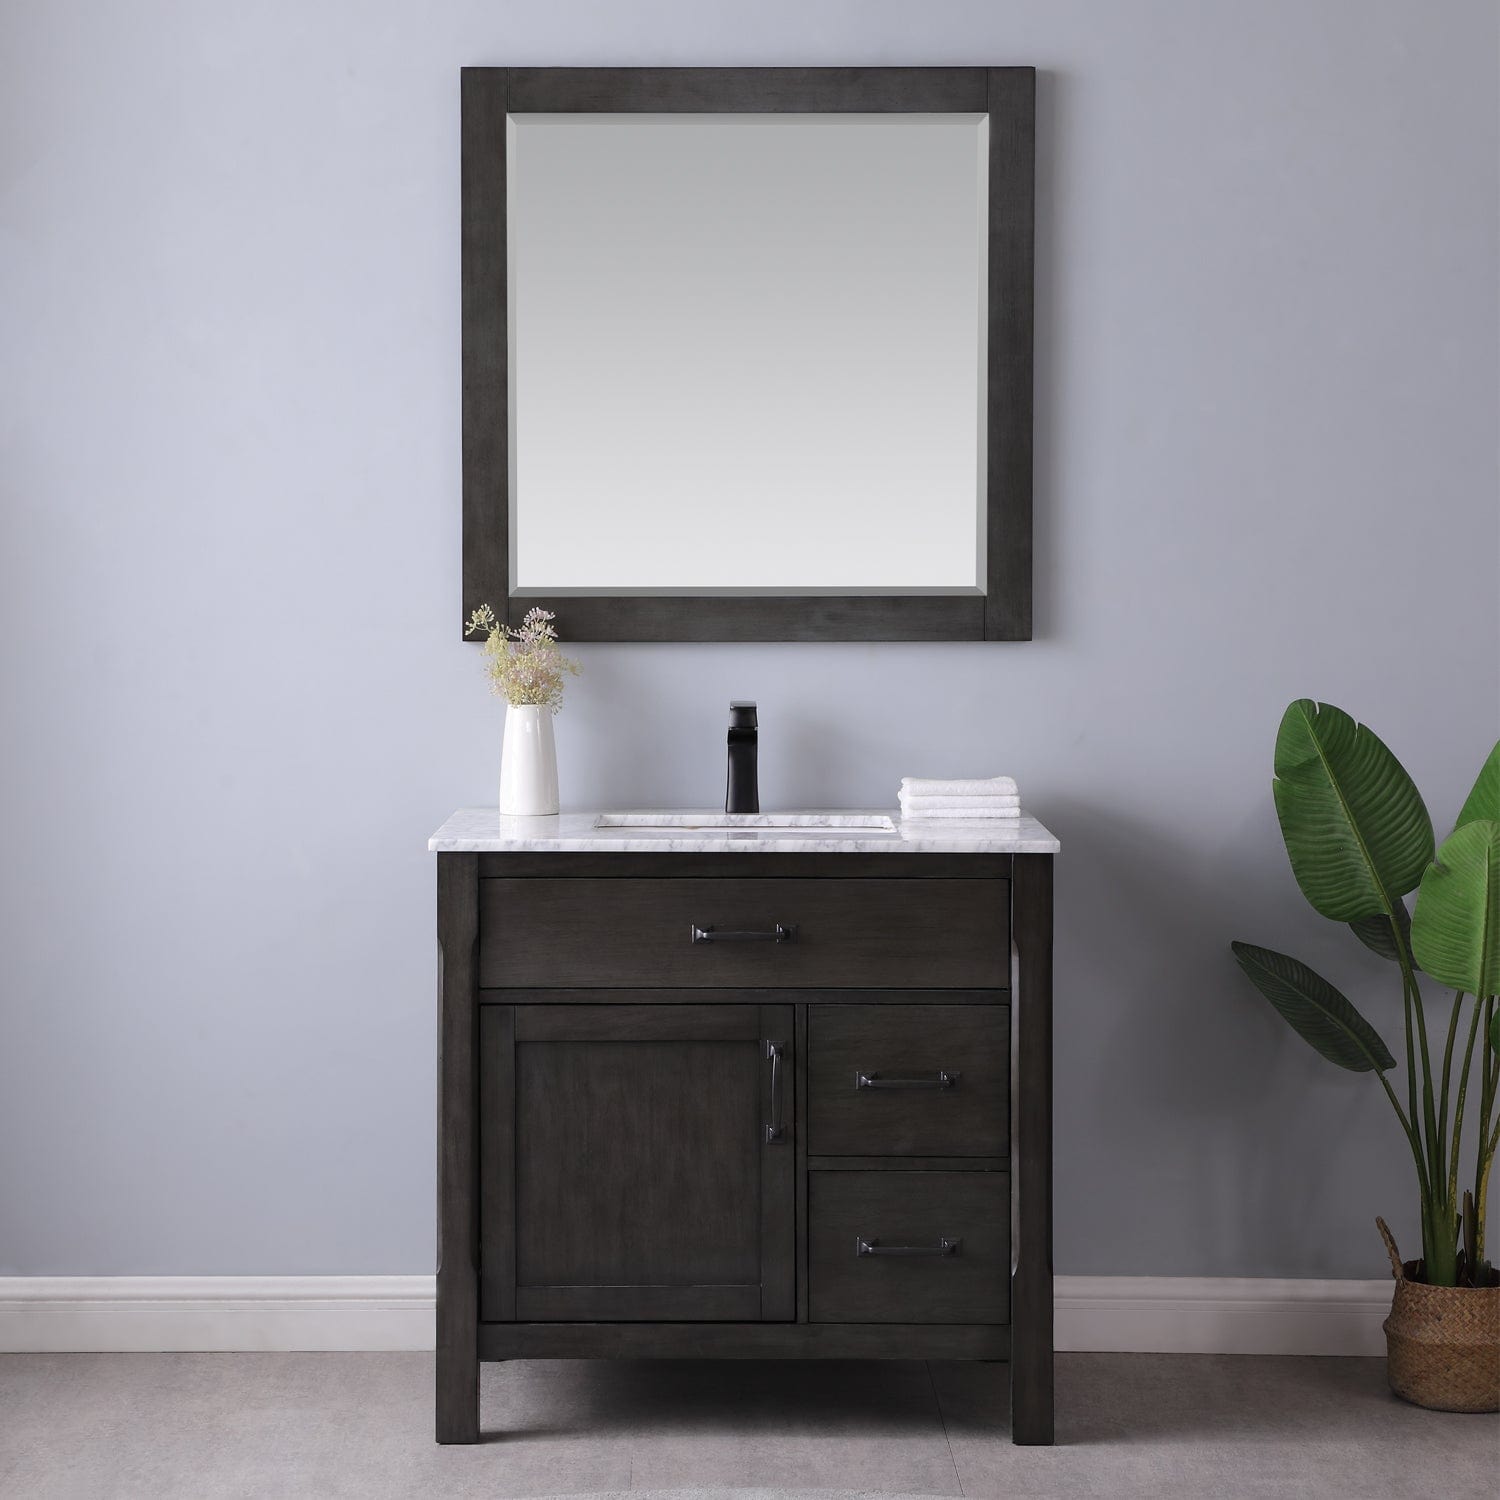 Altair Maribella 36" Single Bathroom Vanity Set in Rust Black and Carrara White Marble Countertop with Mirror 535036-RL-CA - Molaix631112970273Vanity535036-RL-CA